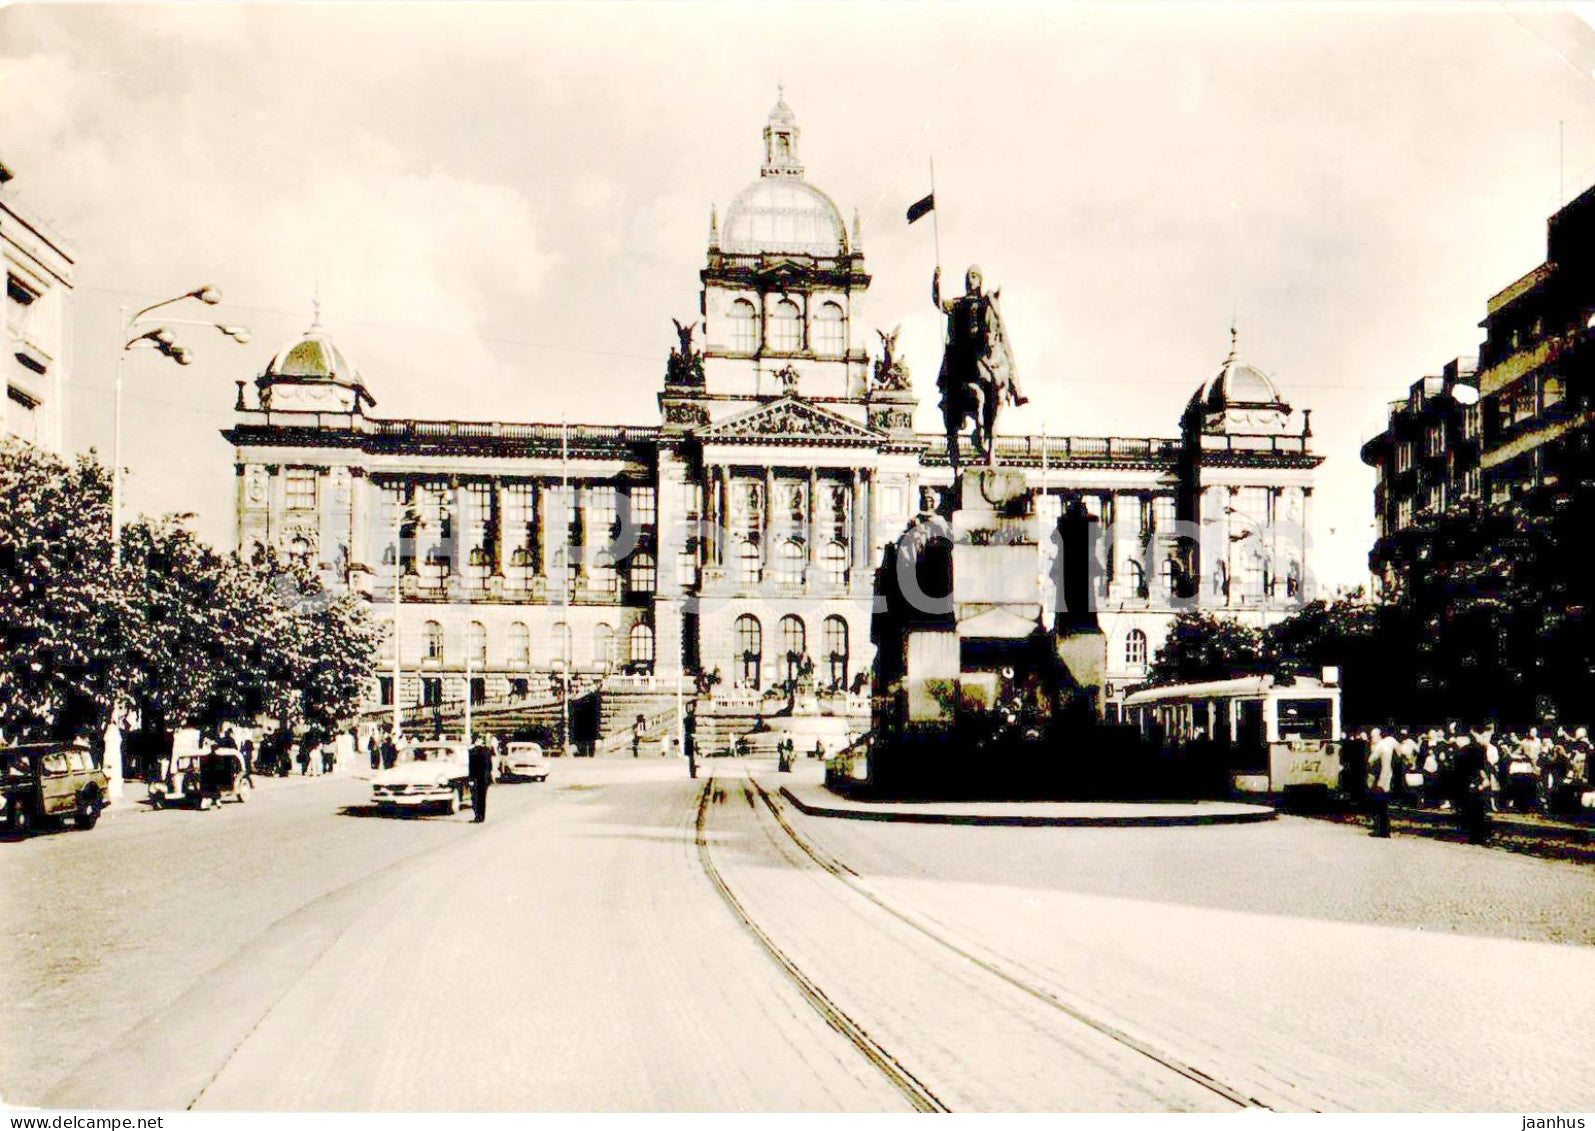 Praha - Prague - Narodni muzeum - National Museum - tram - monument - 1962 - Czech Republic - Czechoslovakia - used - JH Postcards